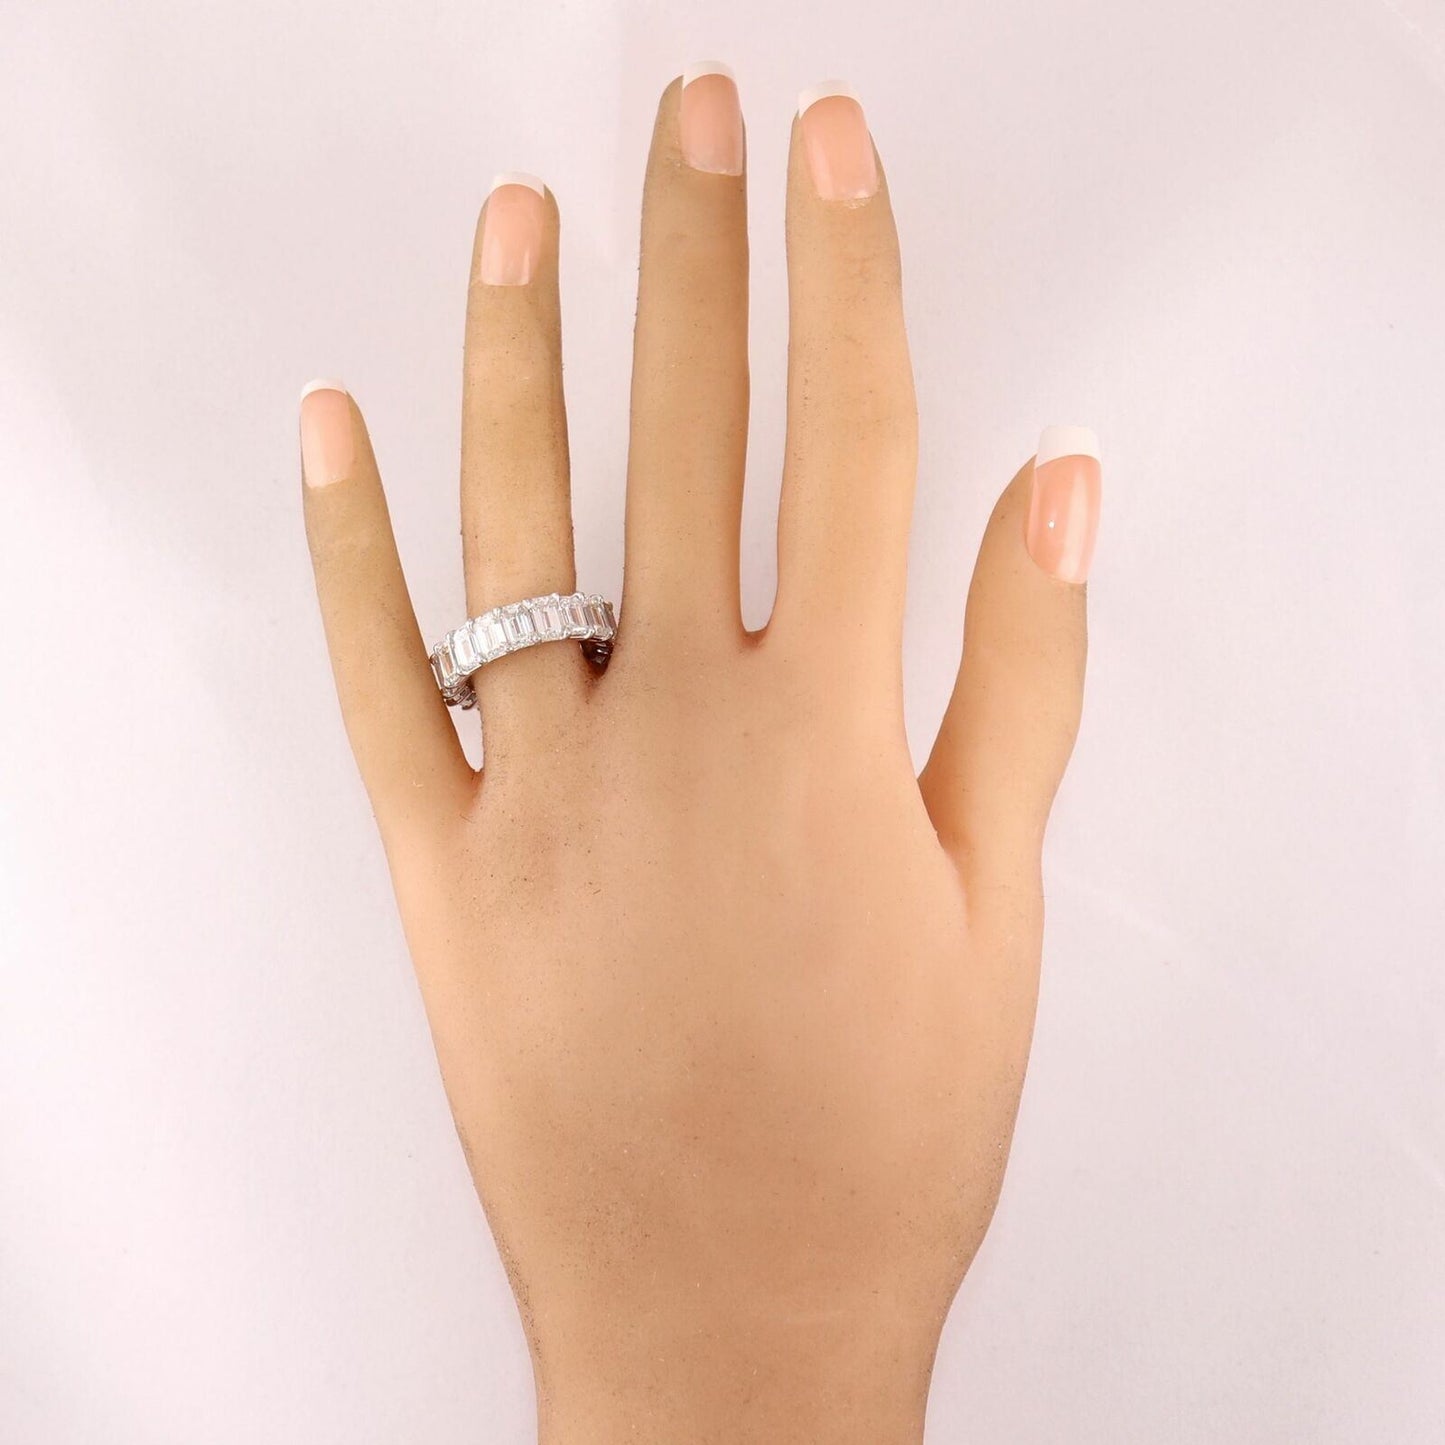 Modern Platinum 9.55ctw Emerald Cut Diamond Eternity Wedding Band Ring